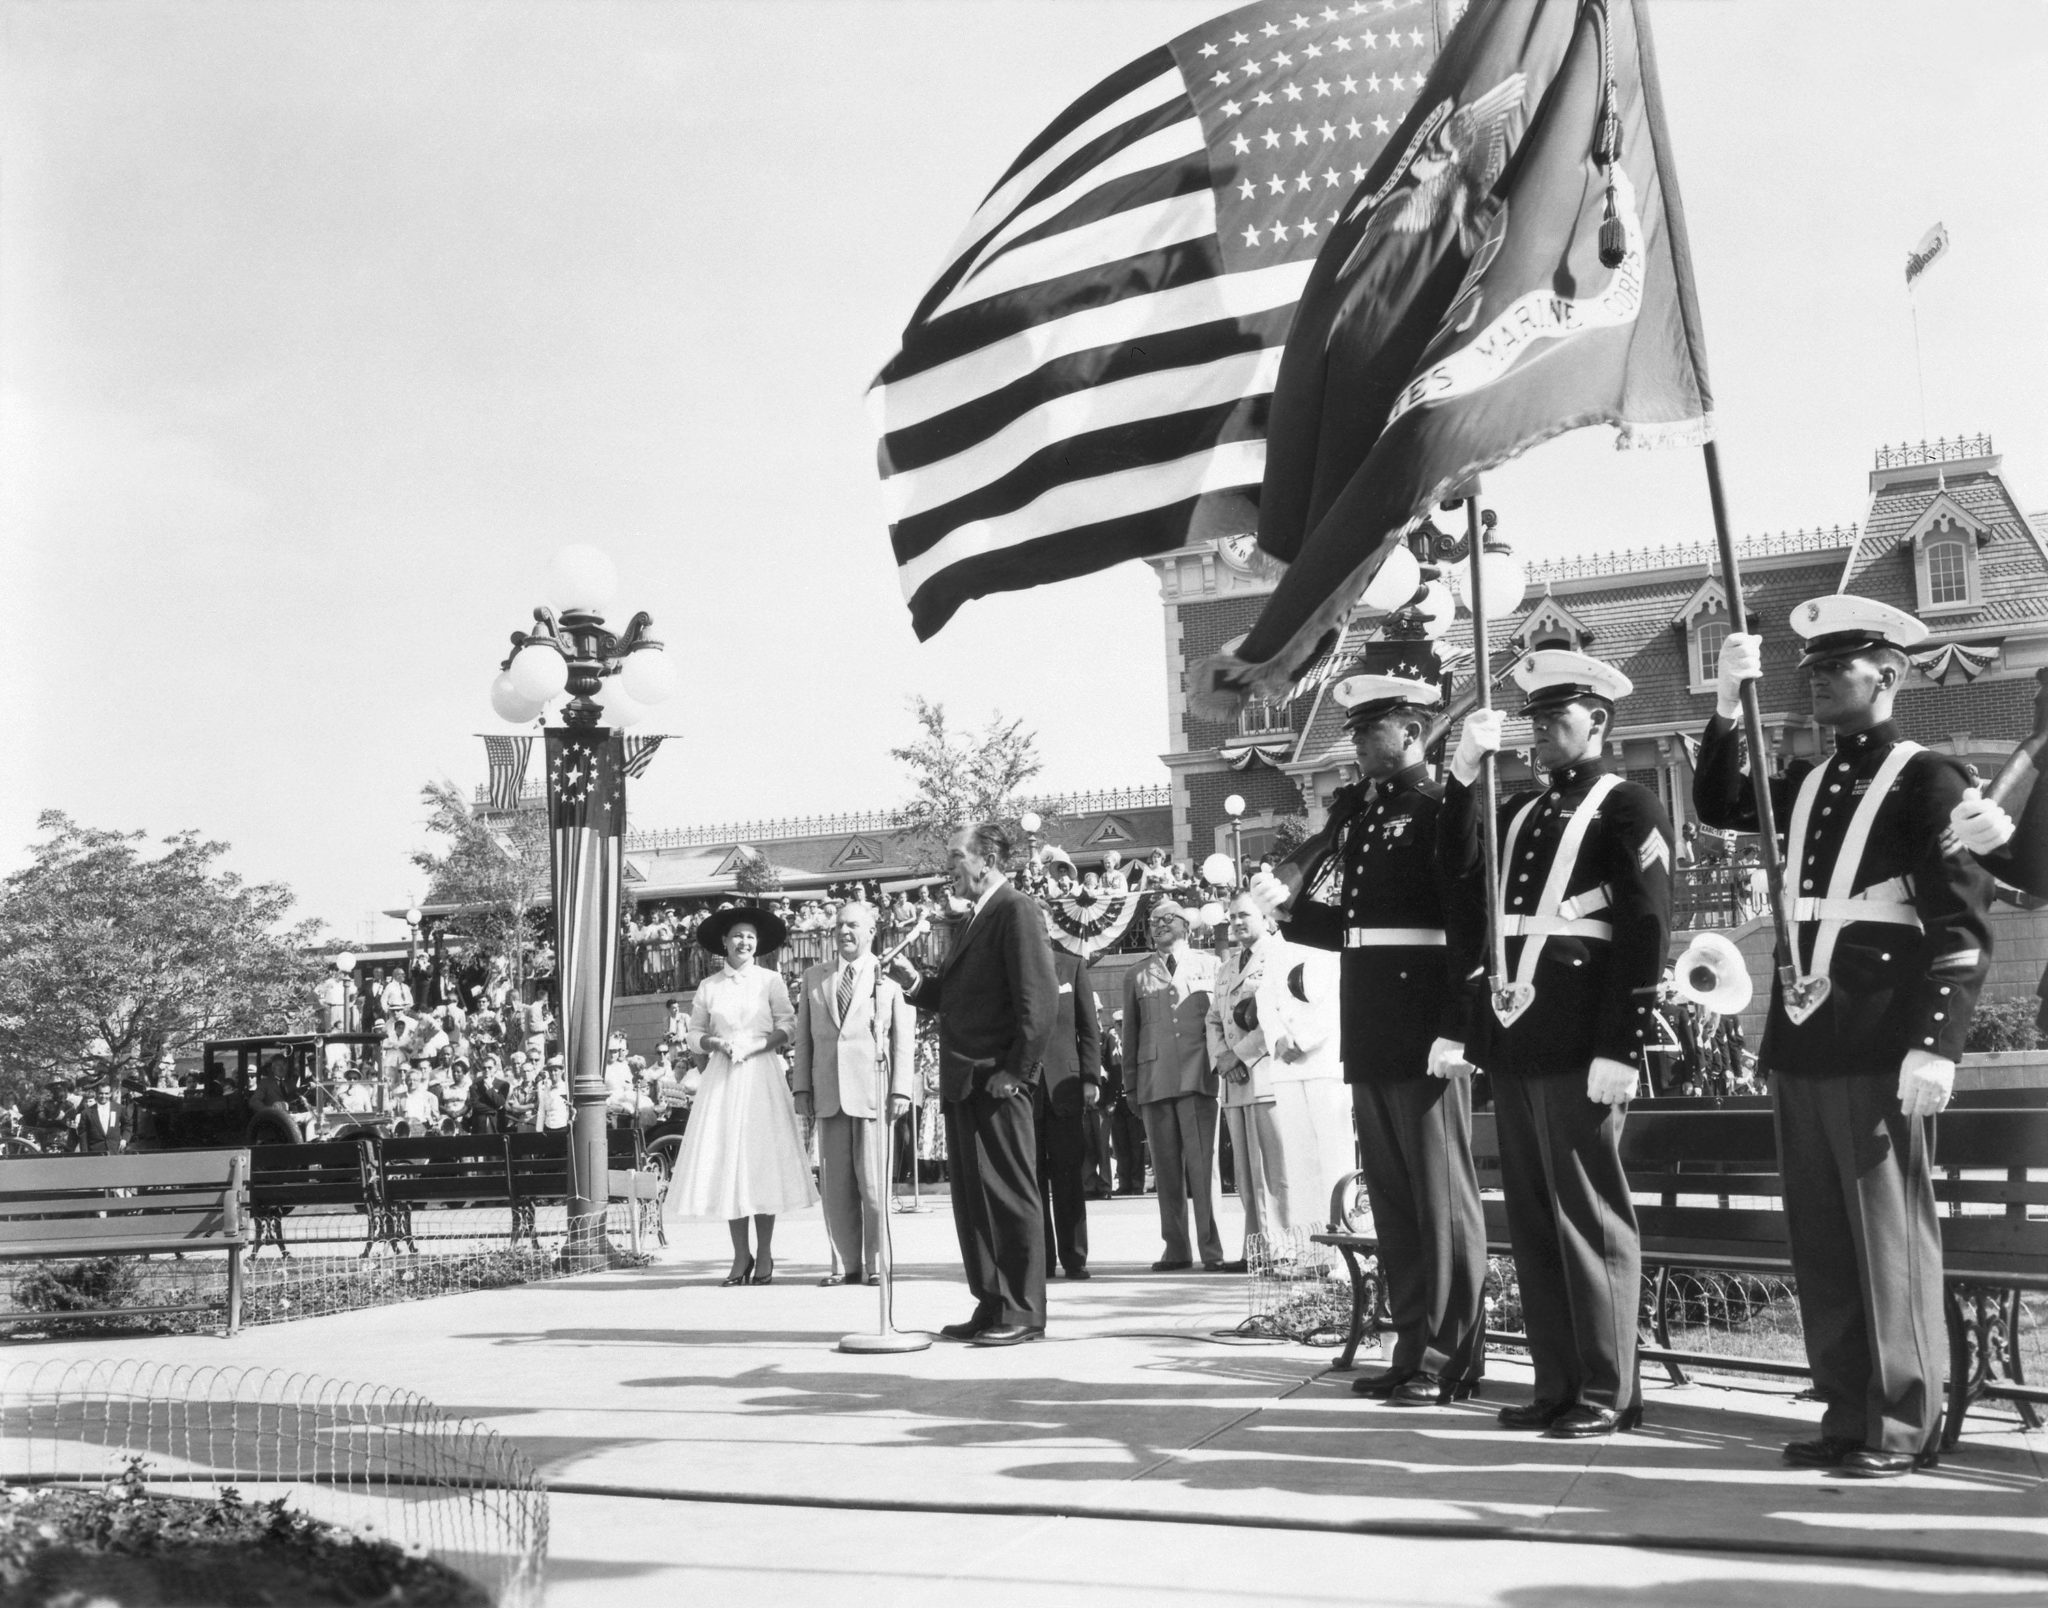 Disneyland Resort celebrates its 66th anniversary on 17 July 2021 with